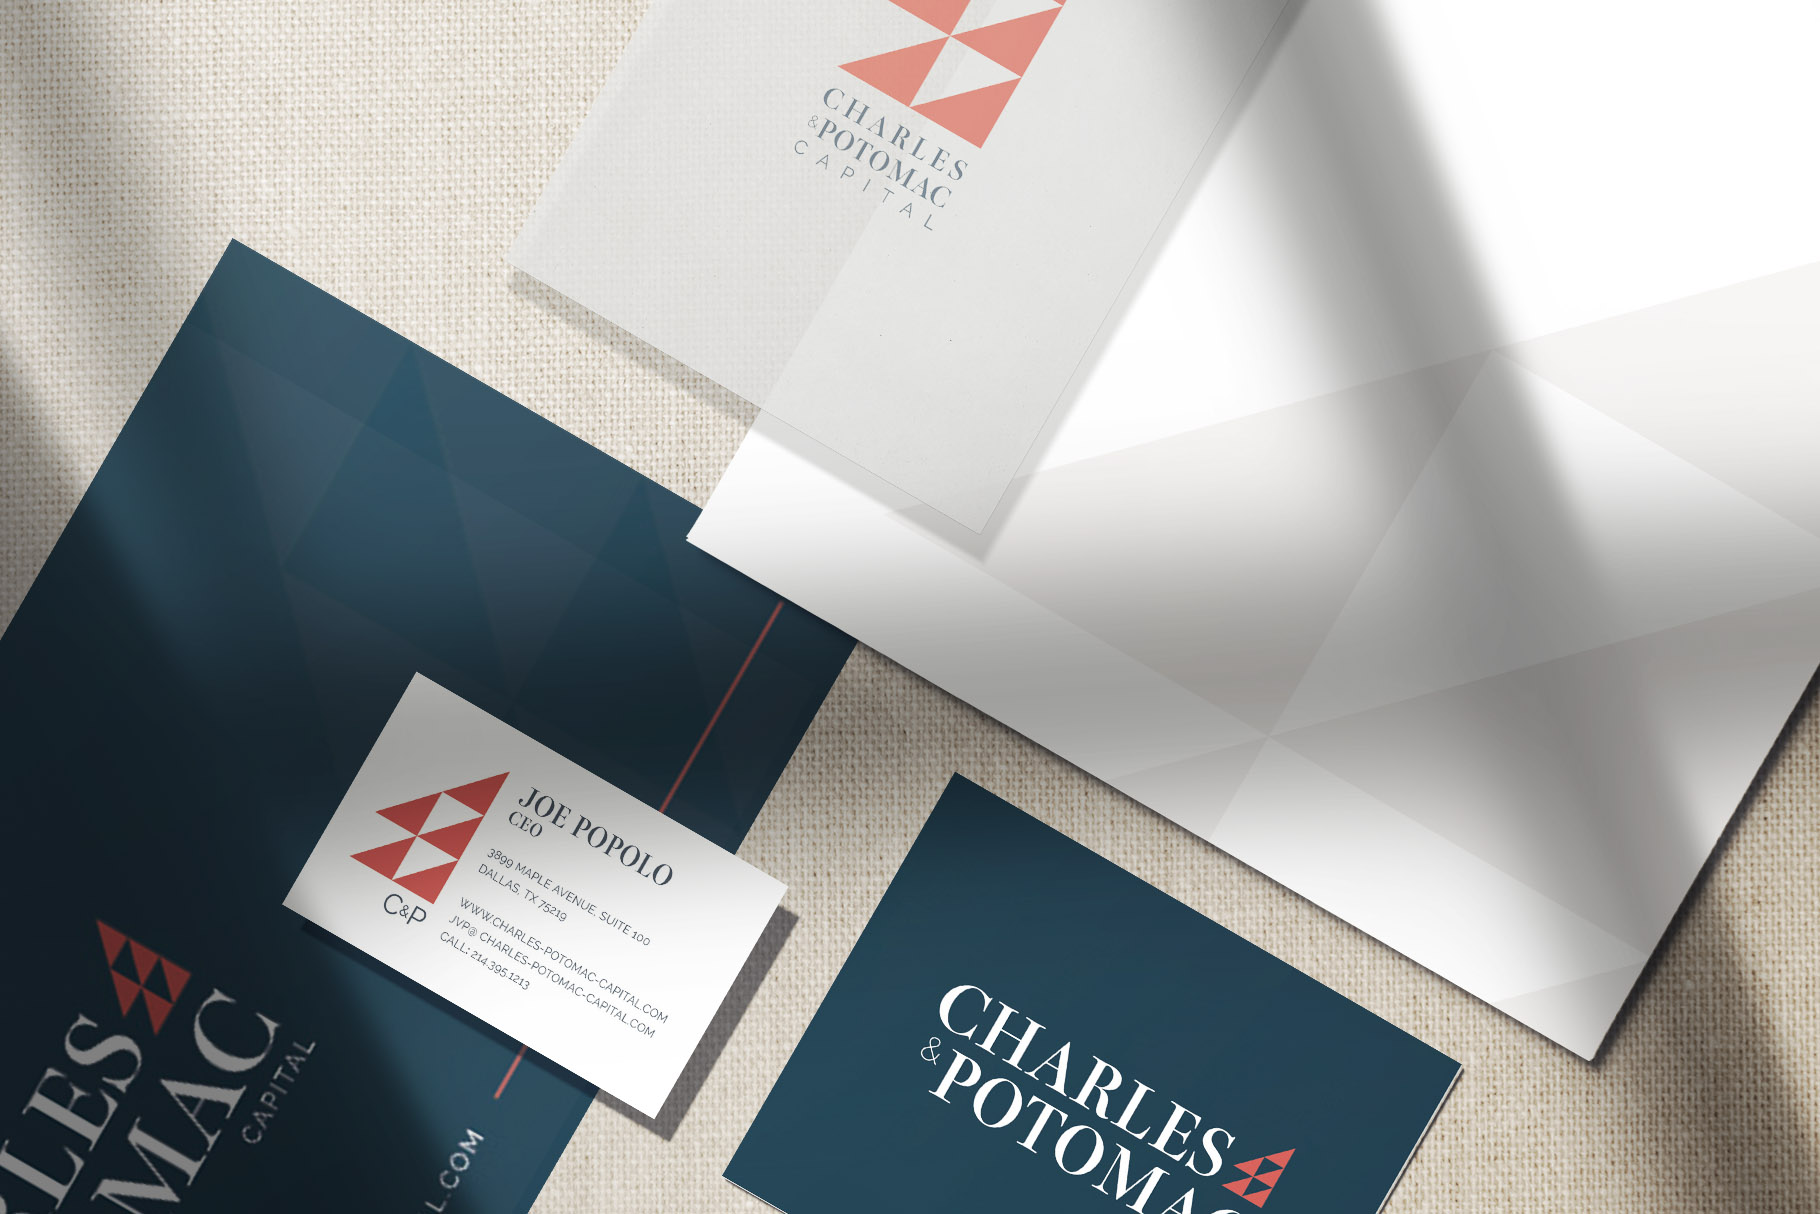 charles & potomac capital brand design, financial brand design